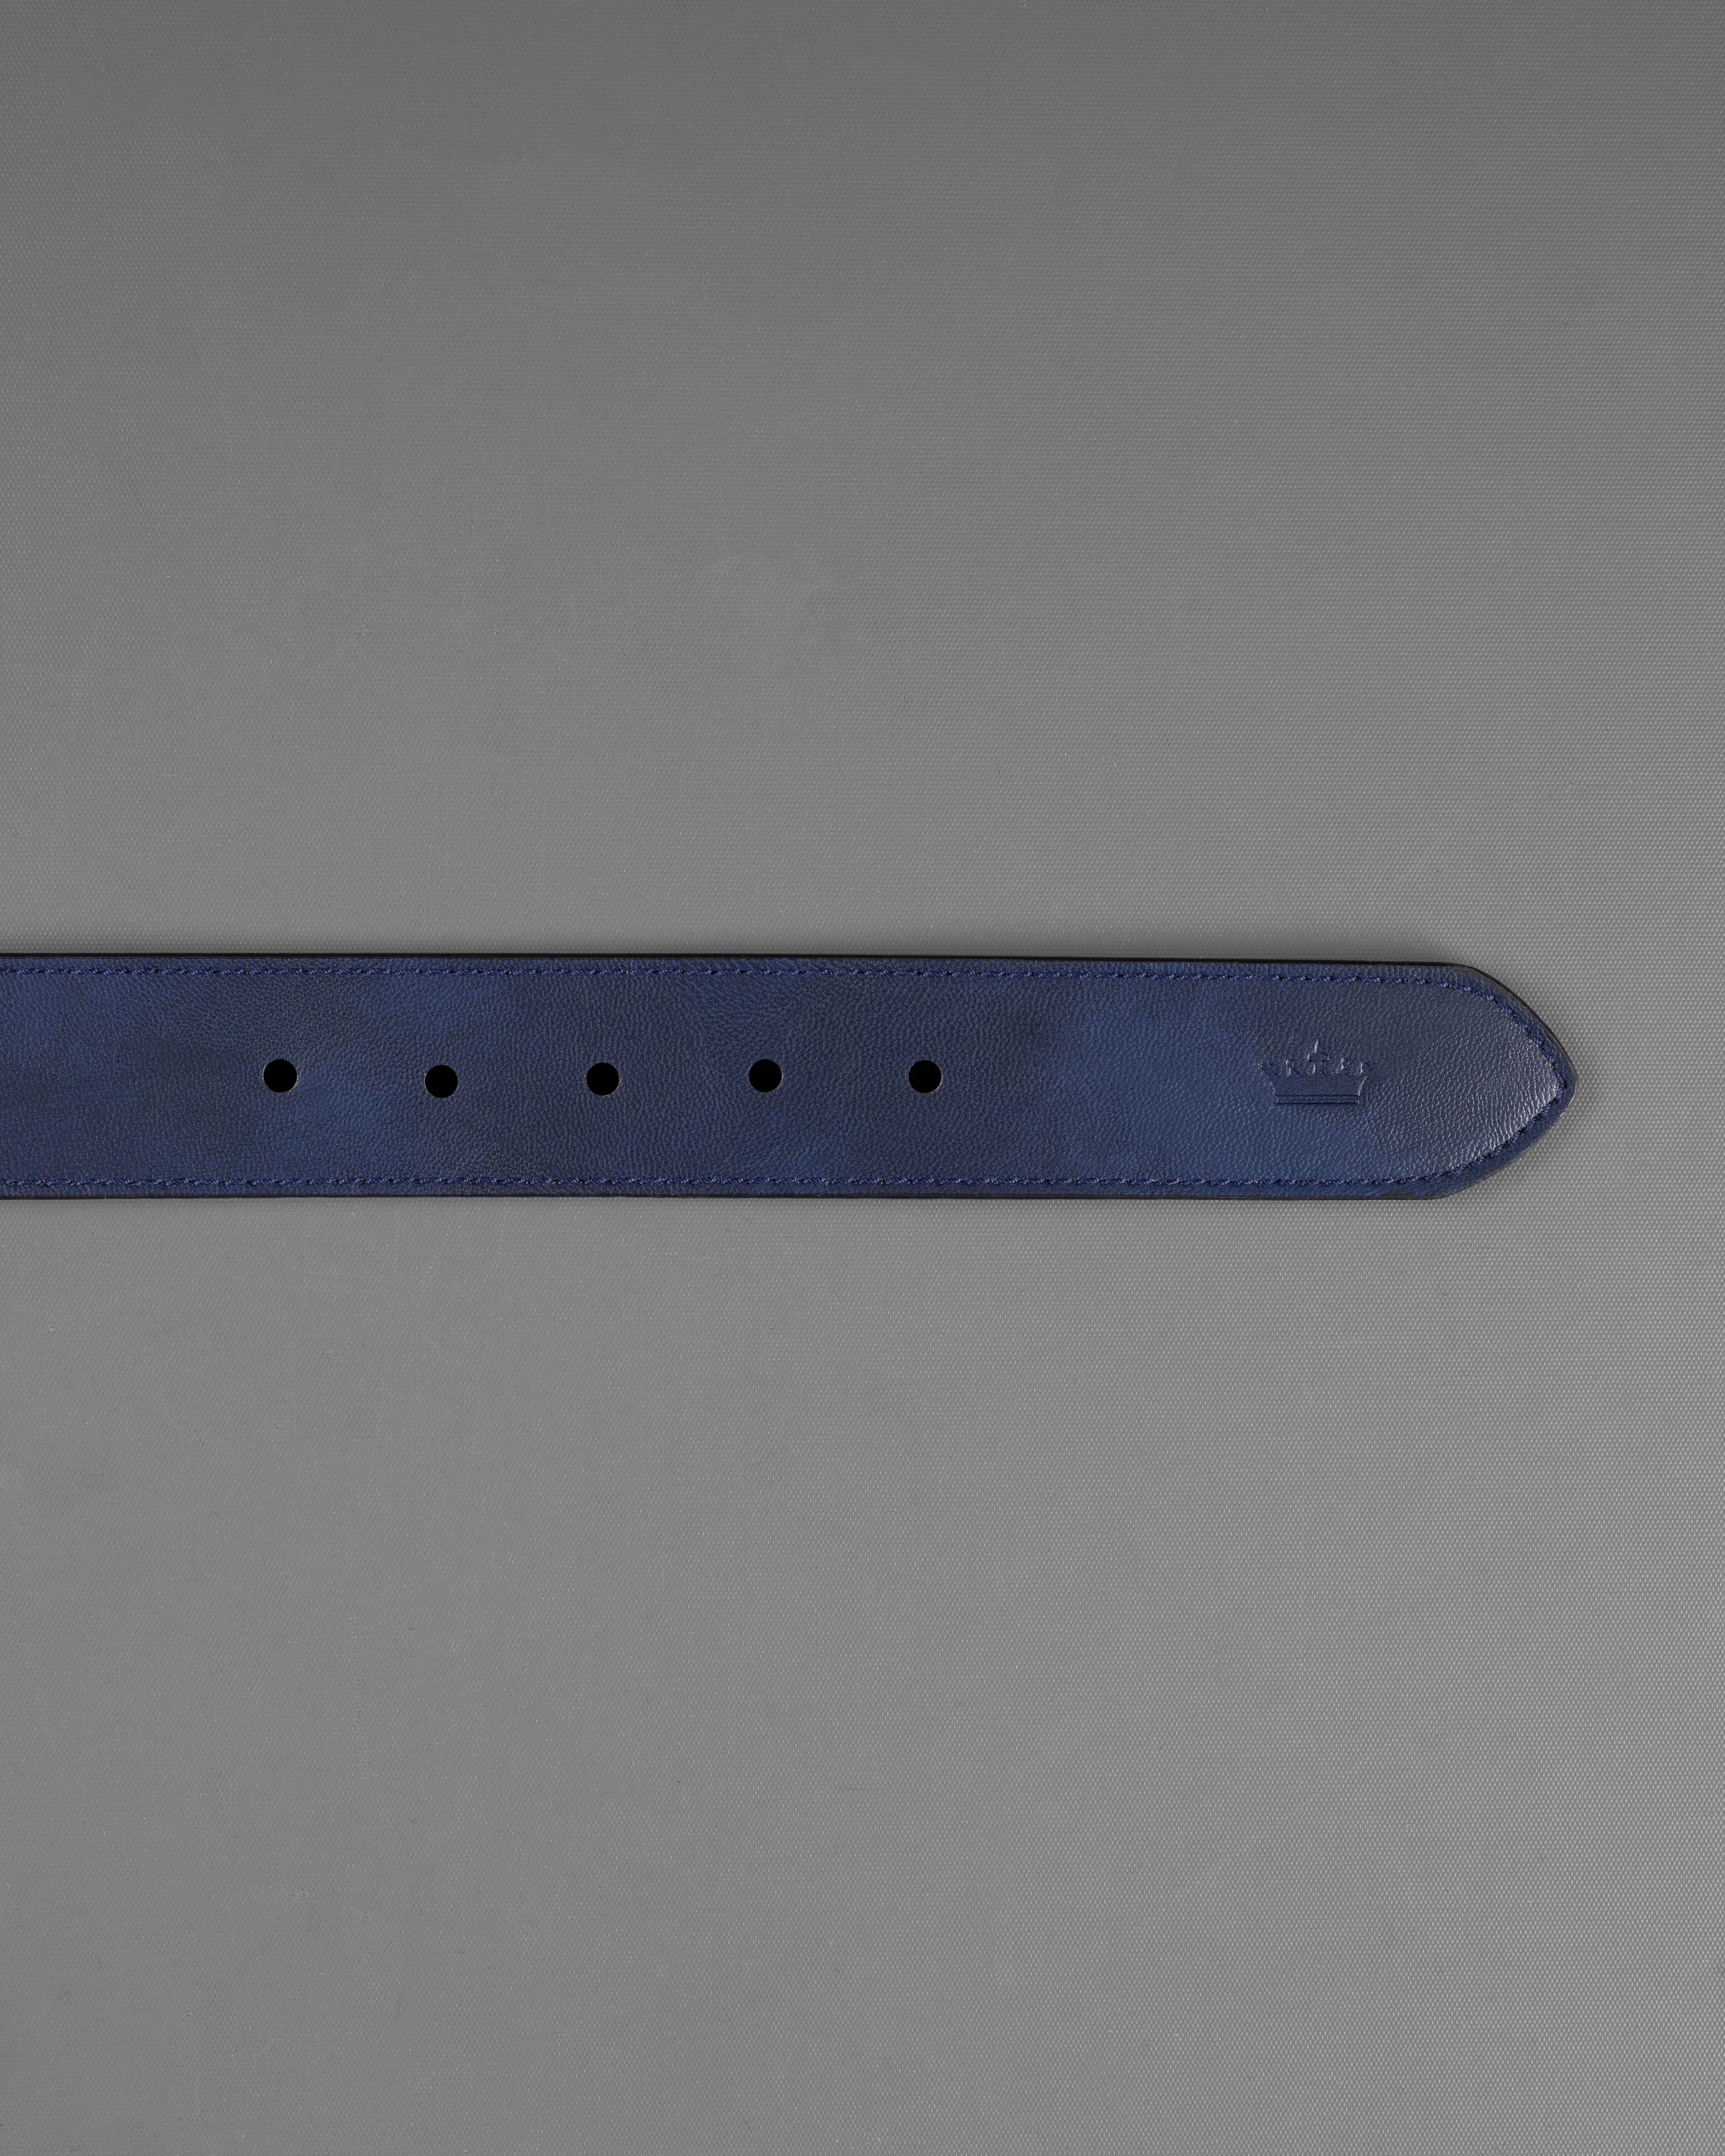 Blue with Black Buckle Leather Free Lightweight Handcrafted Belt BT106-28, BT106-30, BT106-32, BT106-34, BT106-36, BT106-38